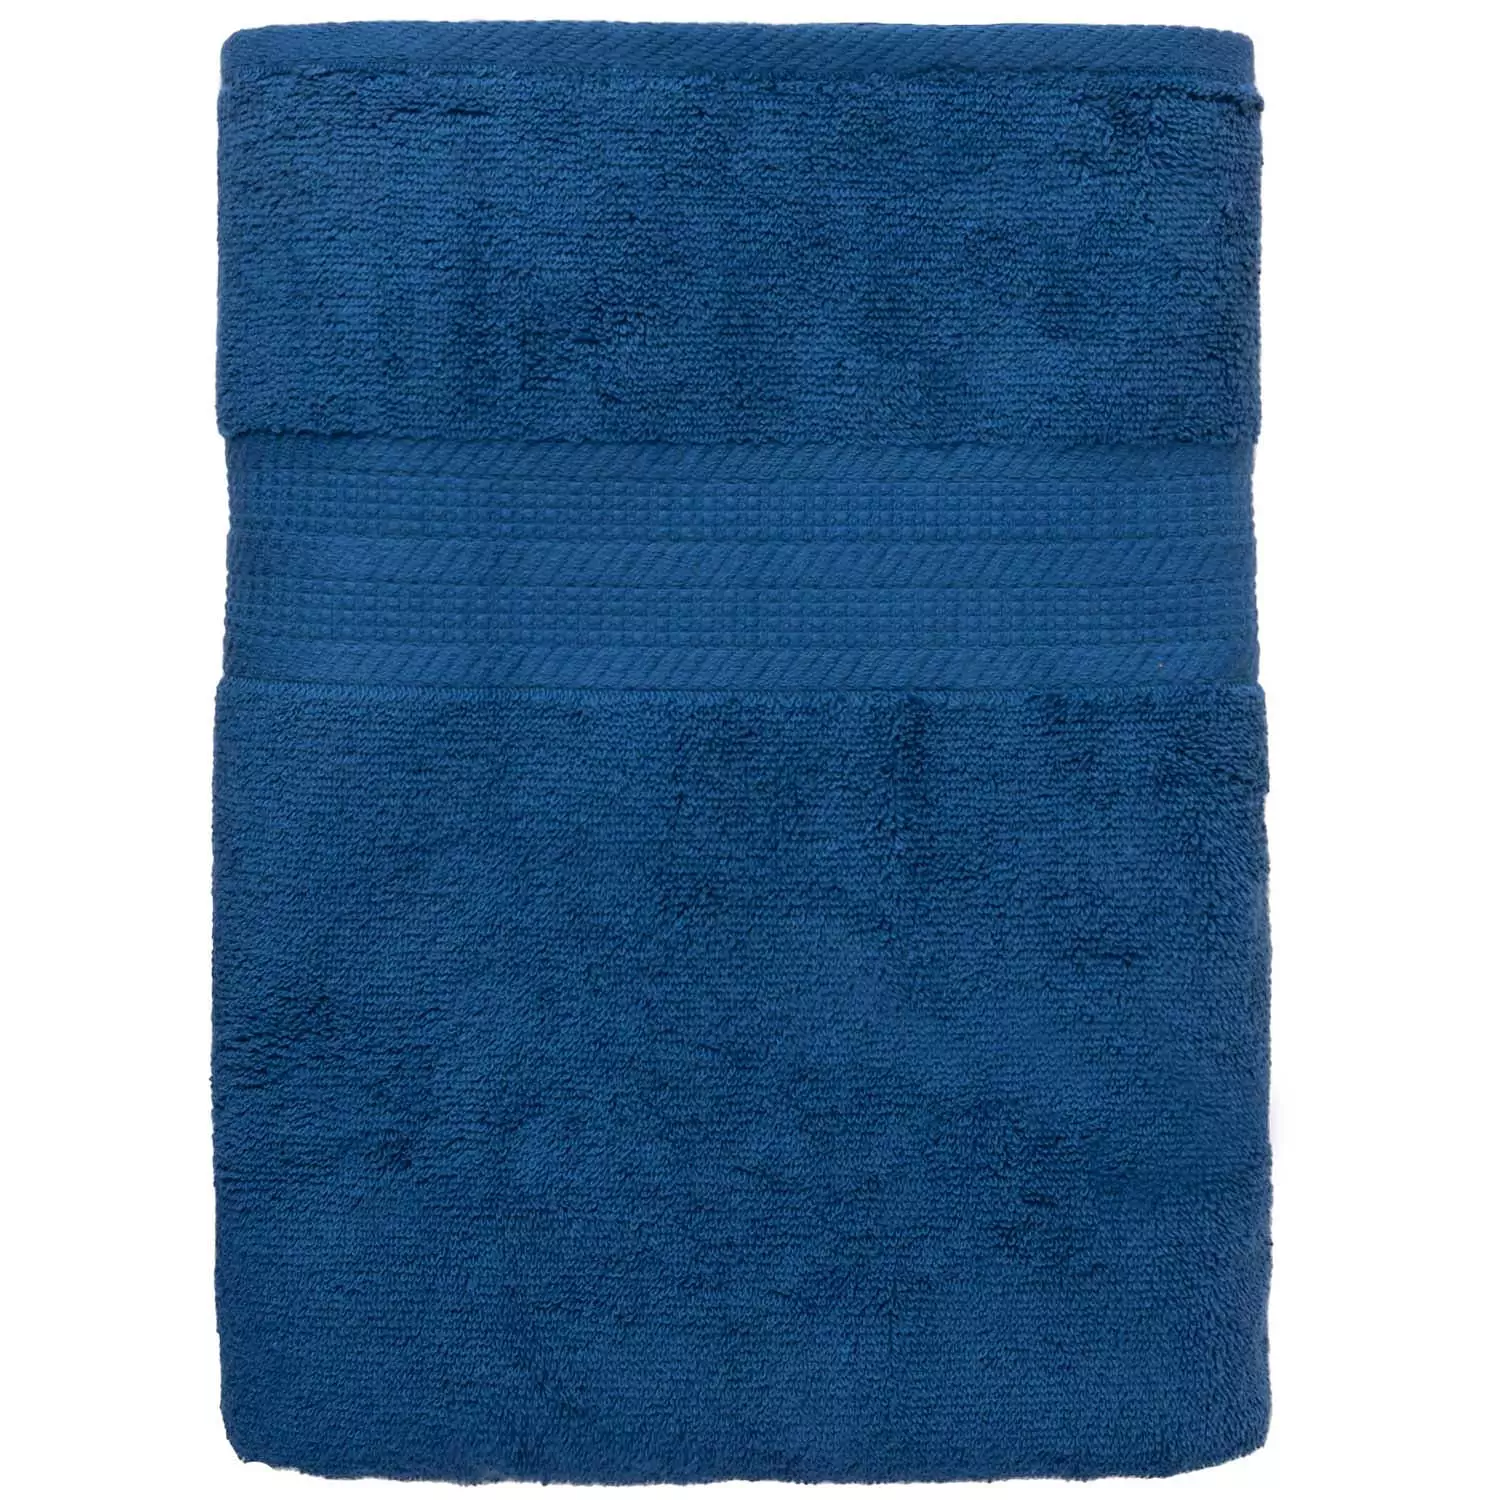 Bath sheet, 30" x 58", blue